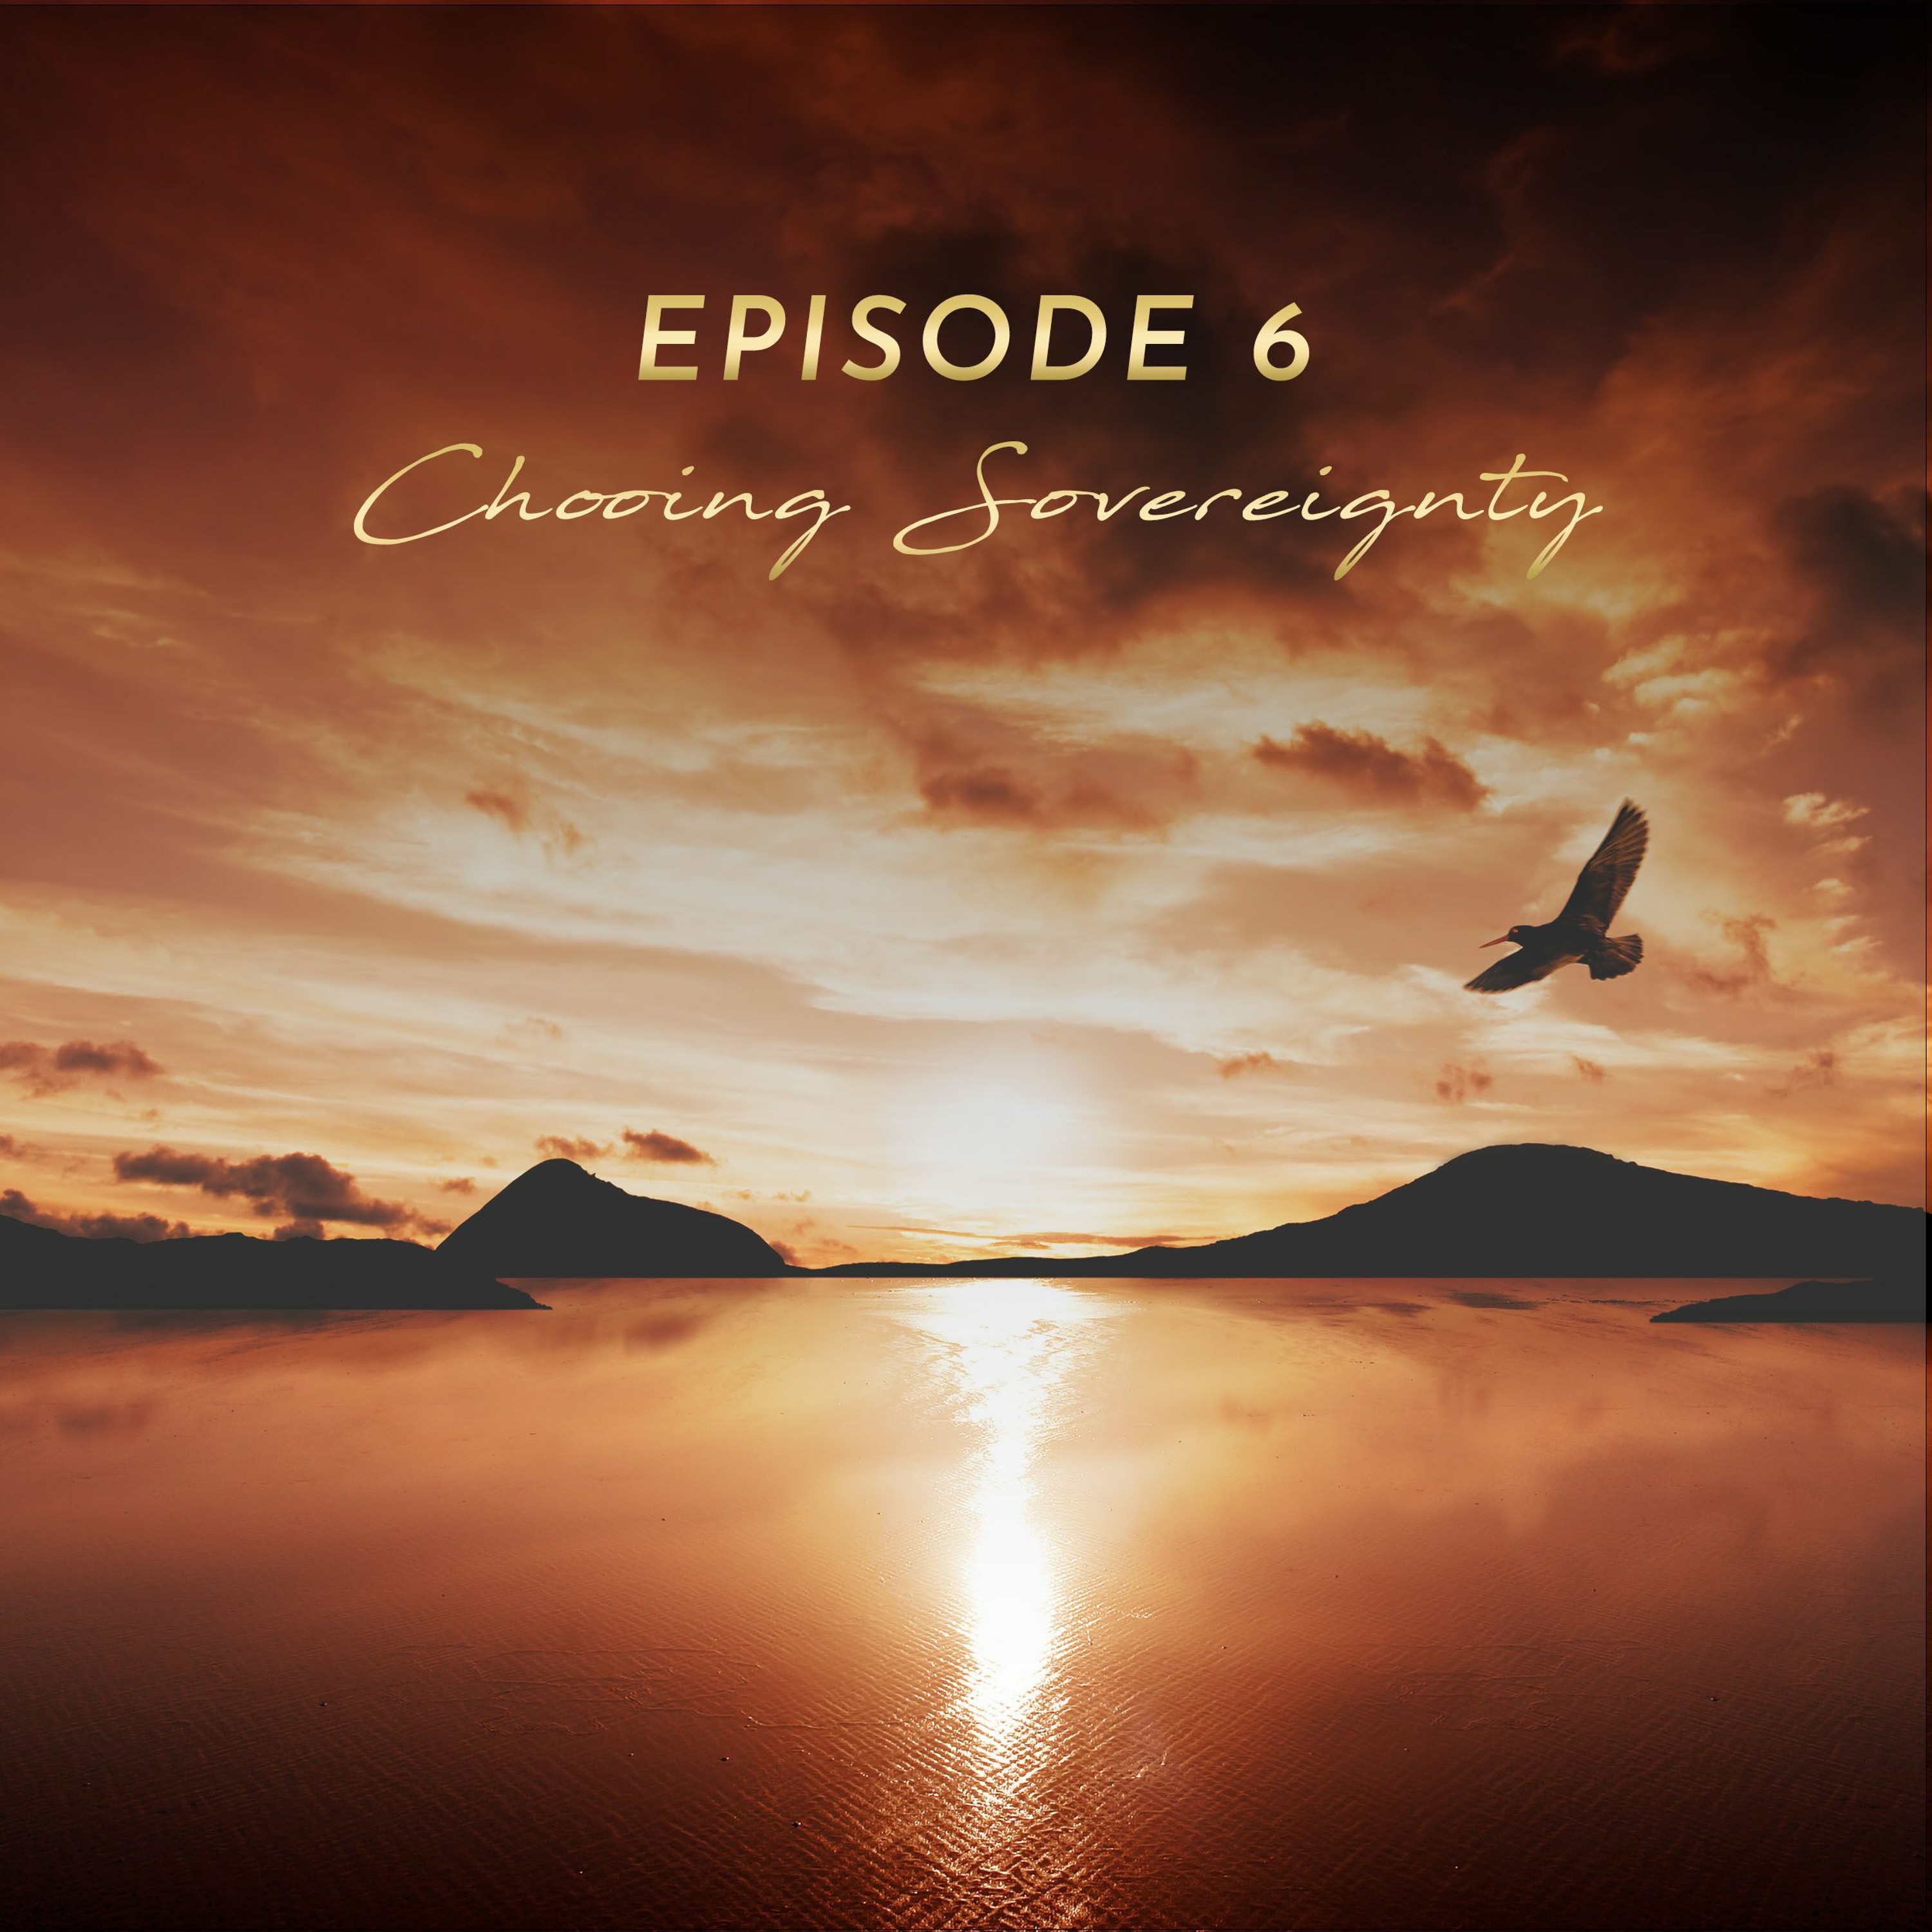 Episode 6: Choosing Sovereignty